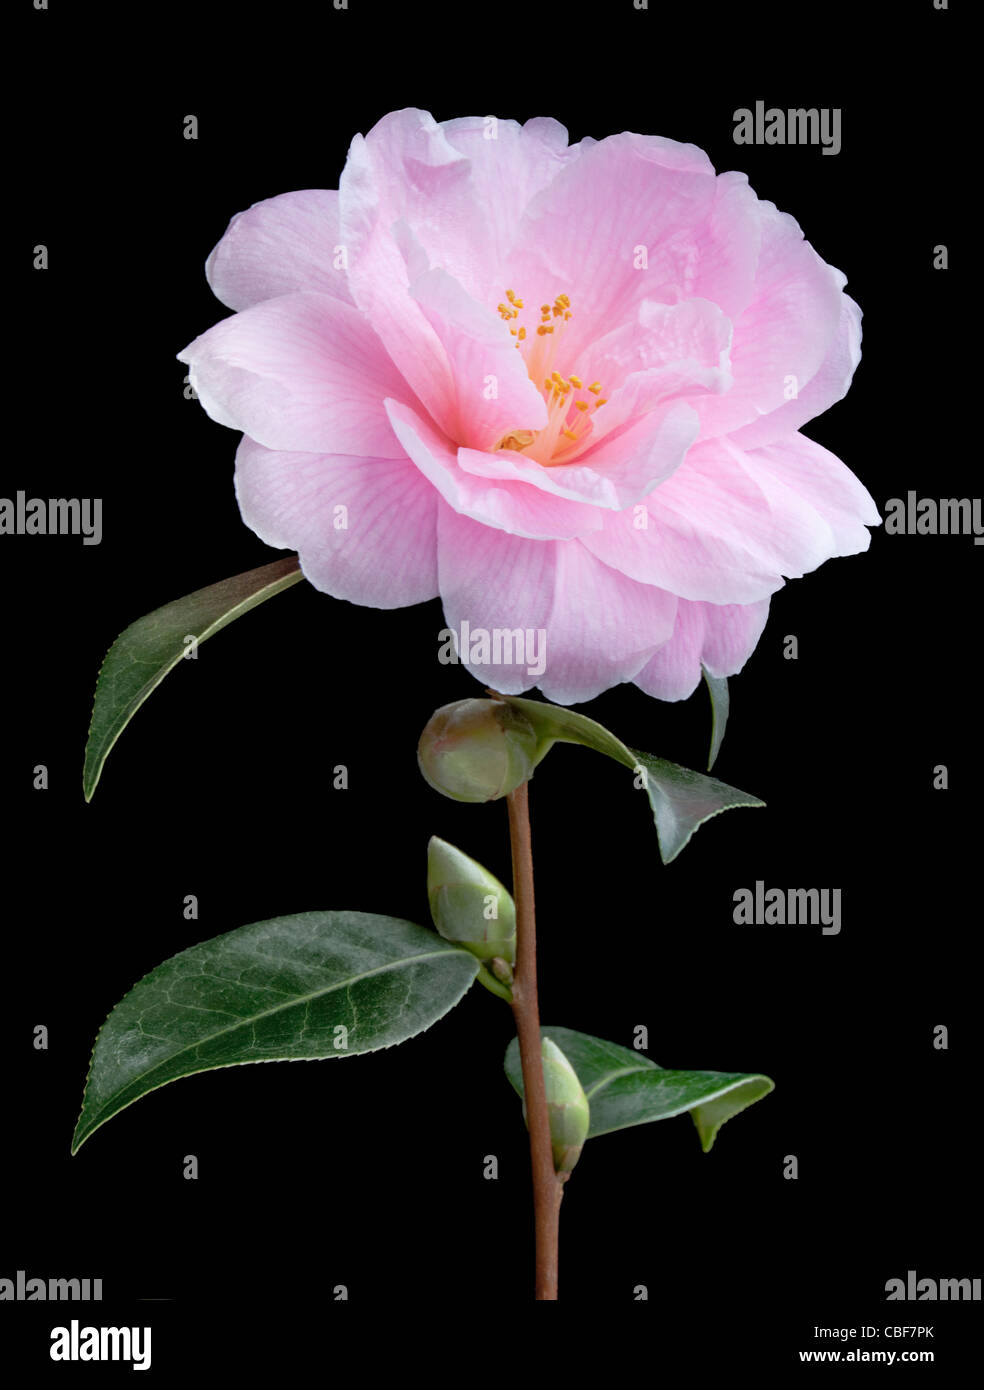 Camellia x williamsii 'Donation', Camellia, Pink flower subject, Black background. Stock Photo